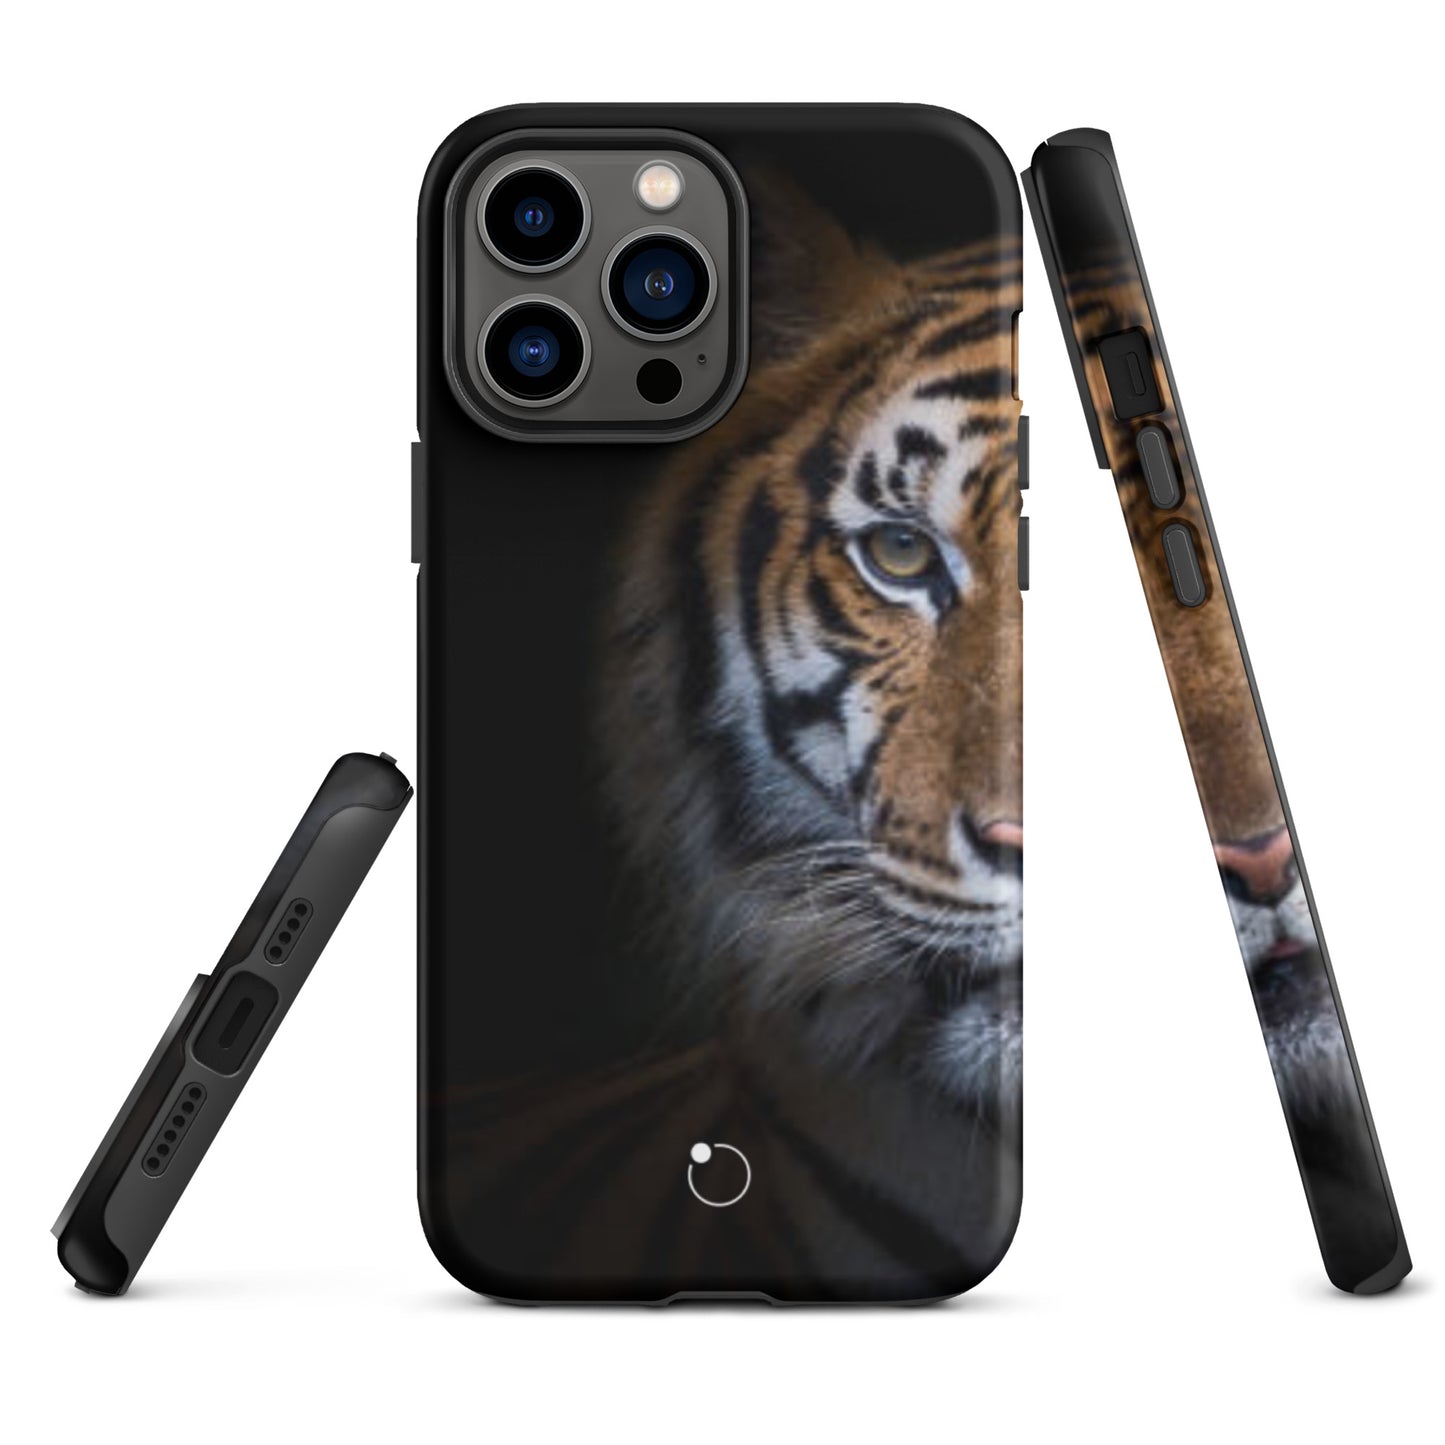 iCase Tiger HardCase iPhone mobile phone case